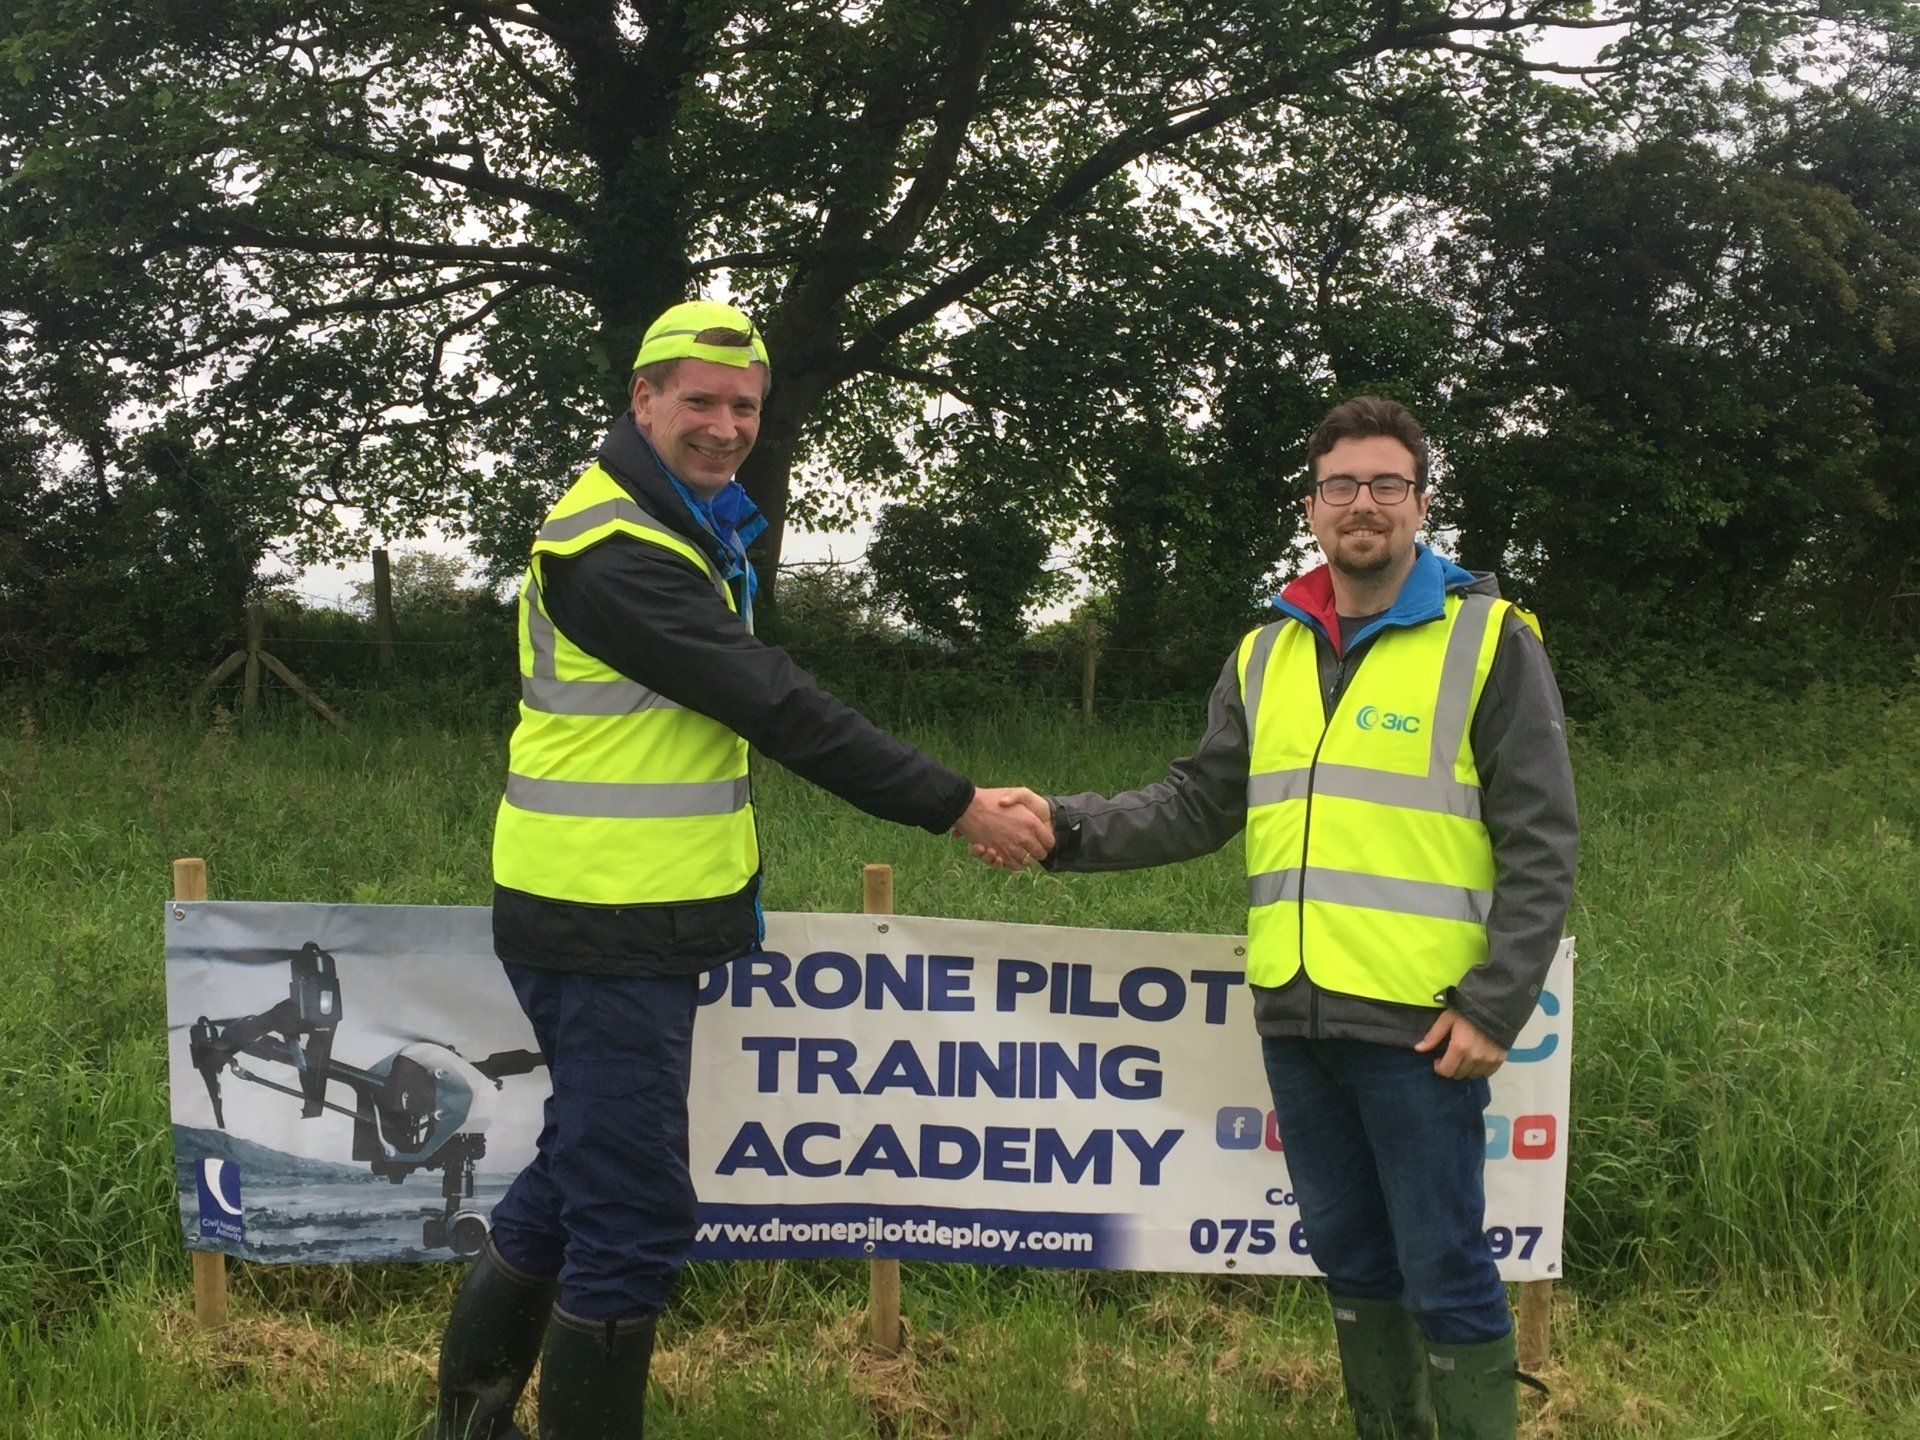 Drone Pilot Training Academy, Drone Pilot Training Northern Ireland